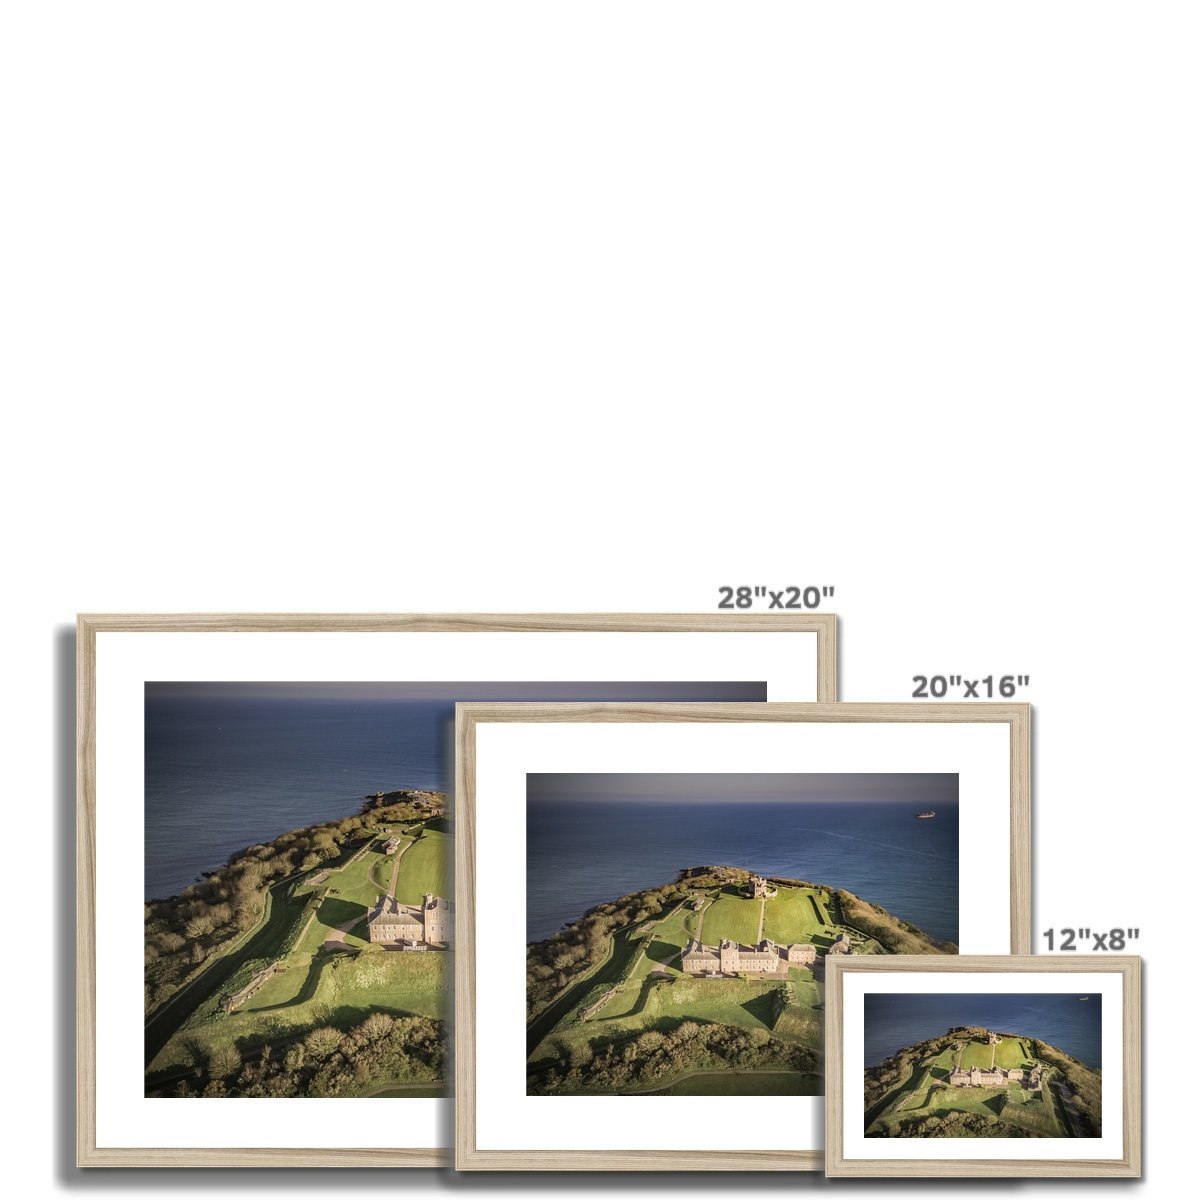 pendennis castle frame sizes